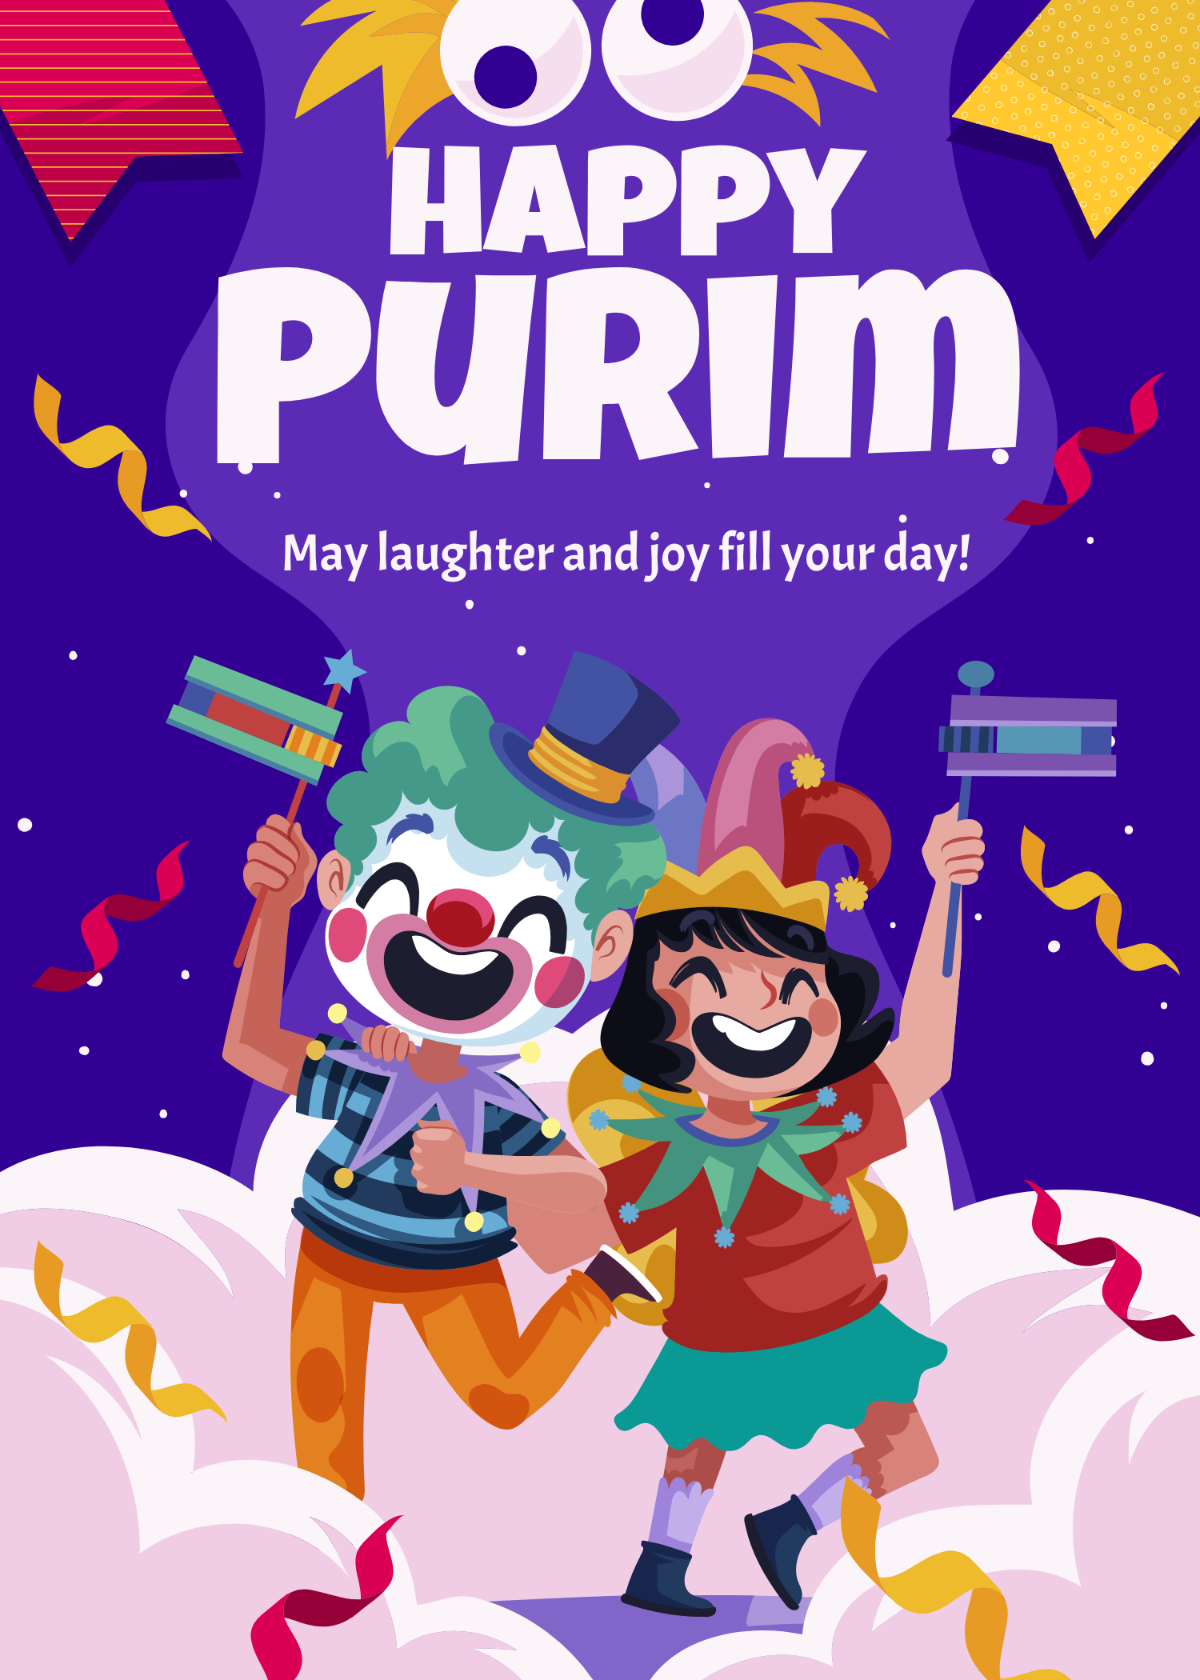 Purim Greeting Card Template